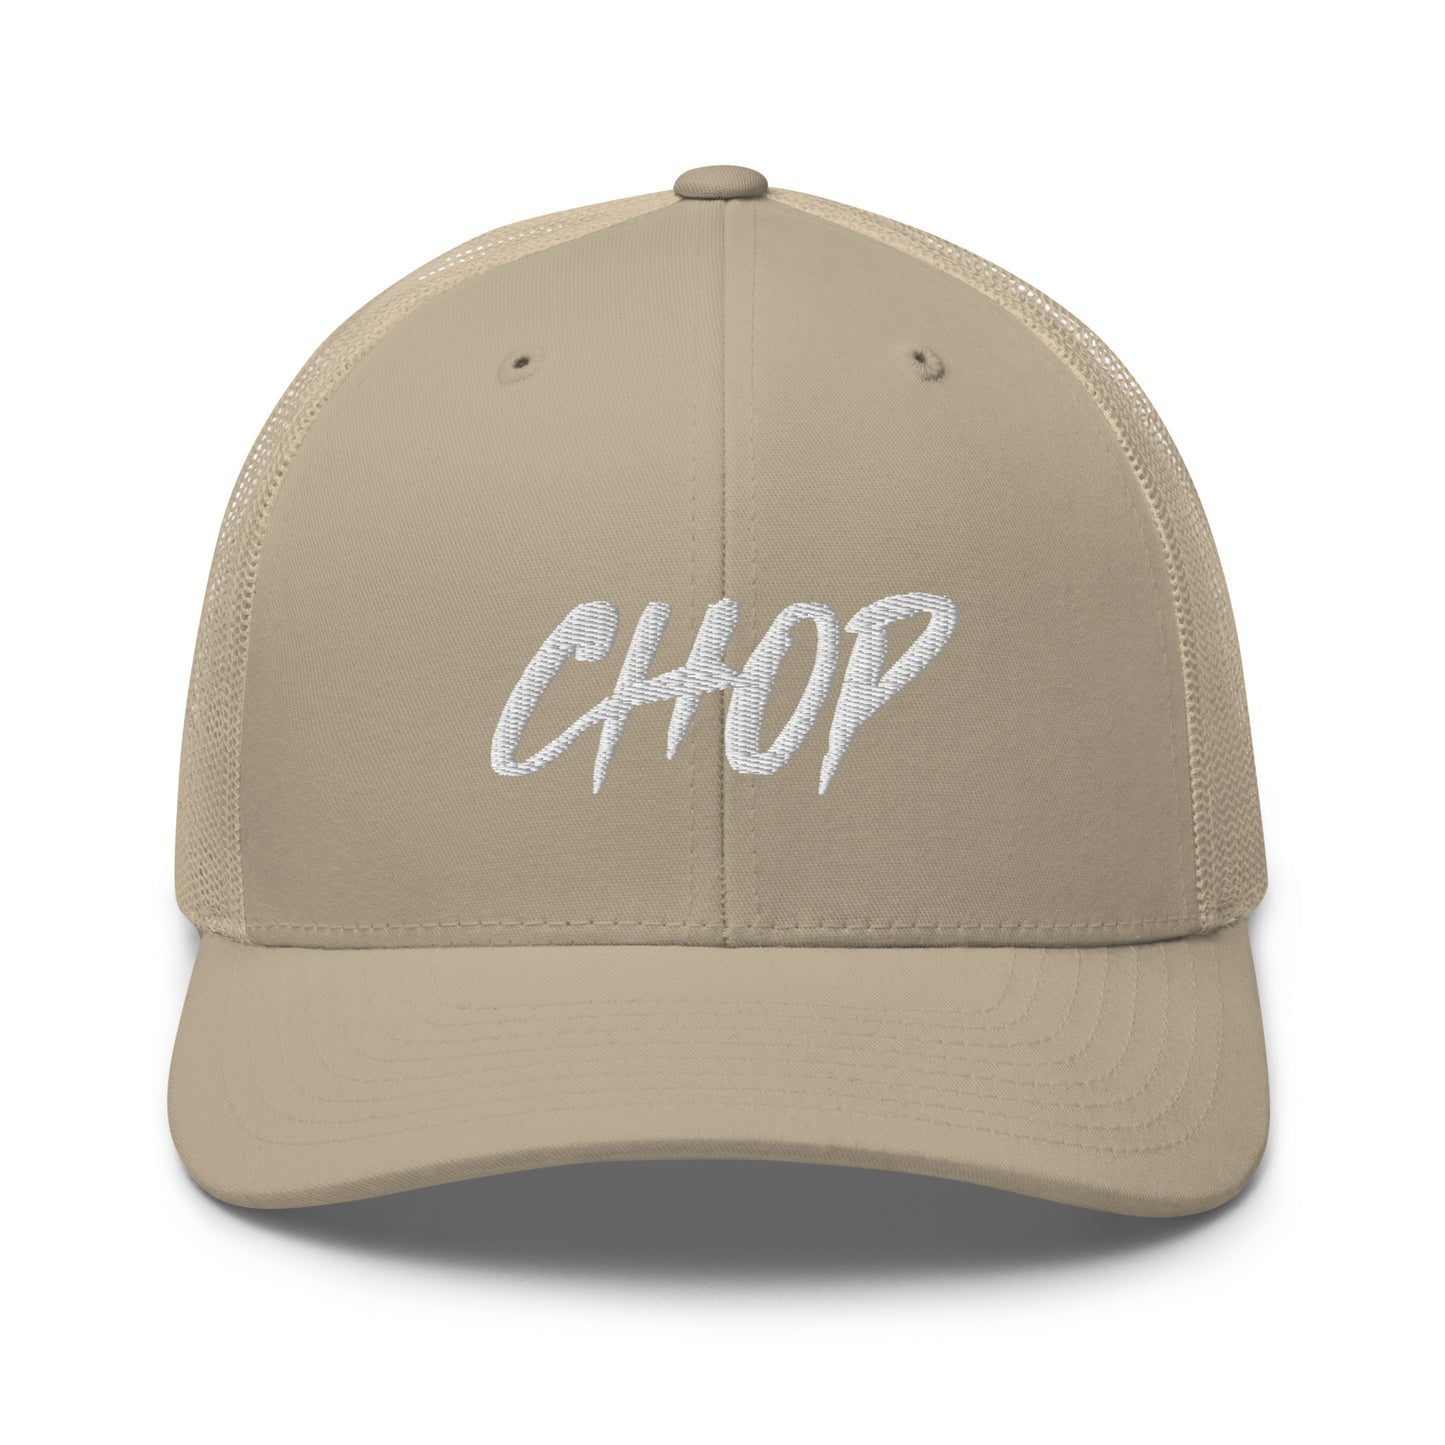 CHOP TRUCKER HAT